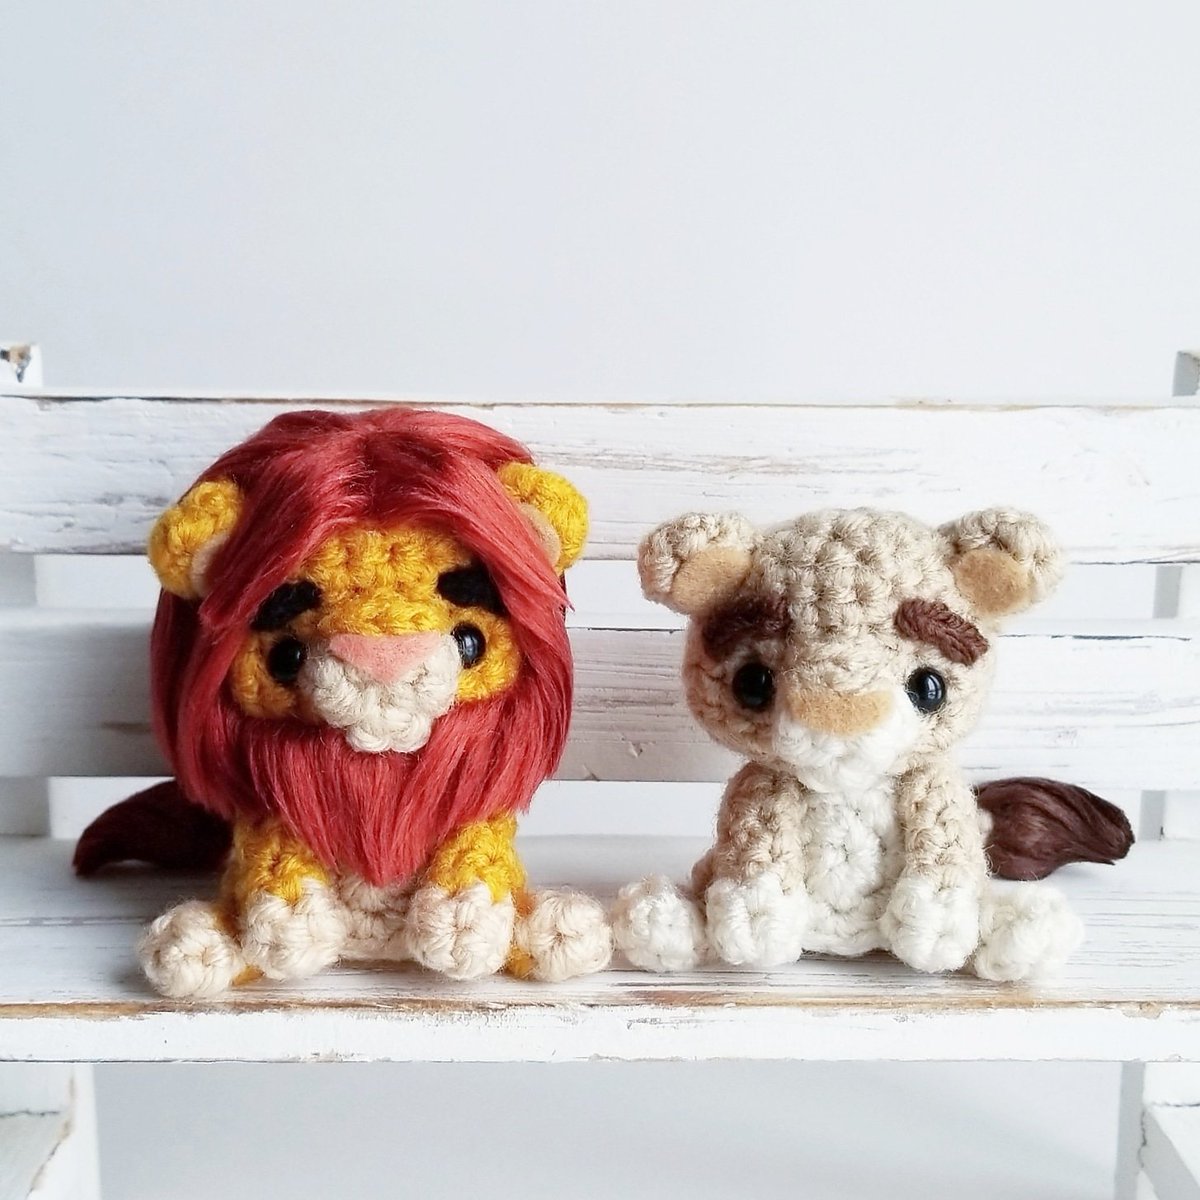 Simba and Nala 🦁 #lionking #disney #disneyworld #amigurumi #crochet #handmade #etsy #anyazoe #handmadewithjoann